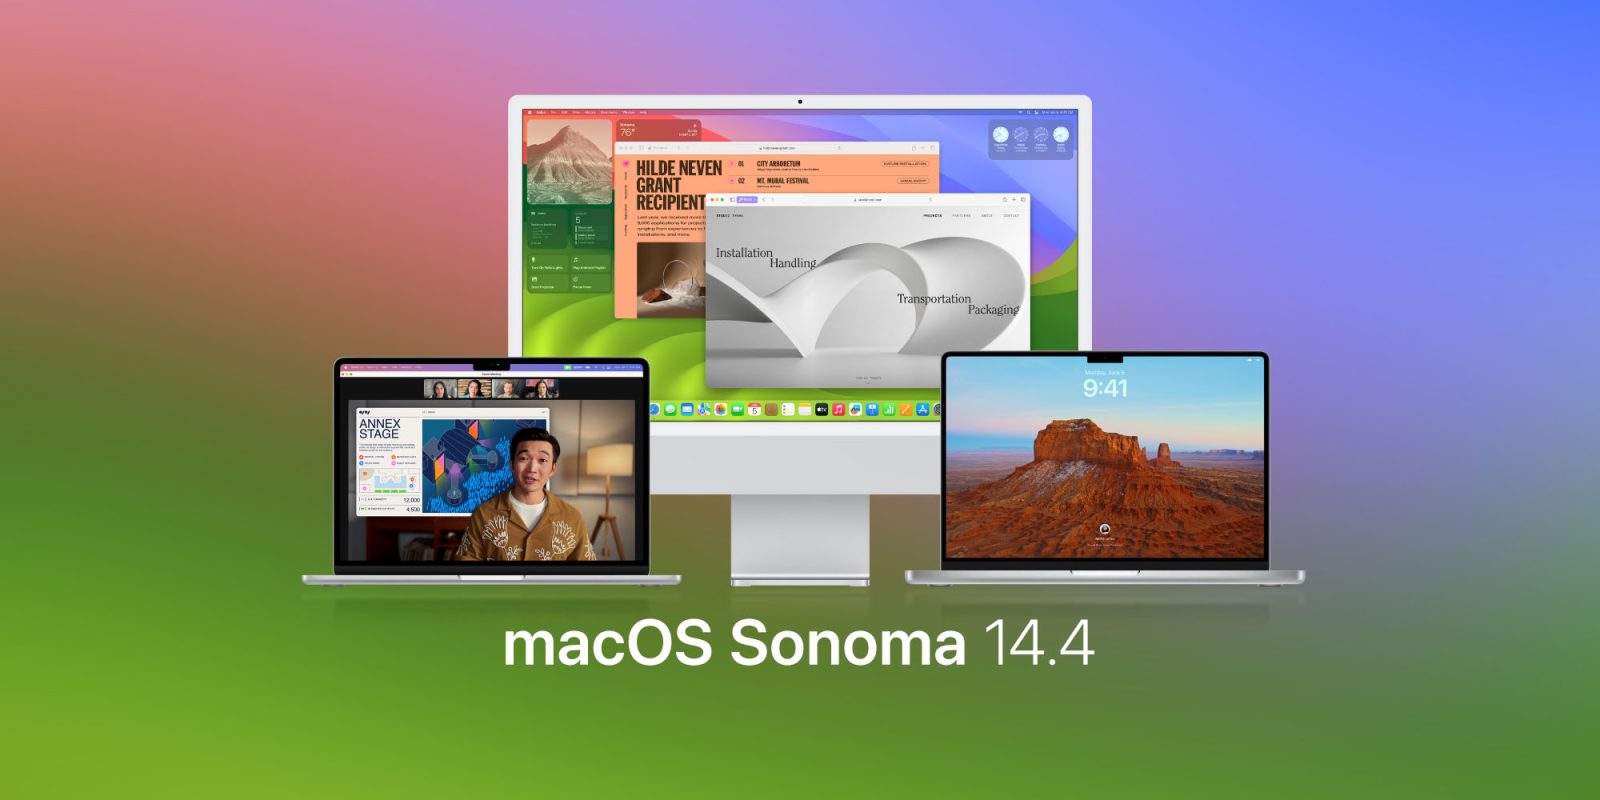 macOS Sonoma 14.4